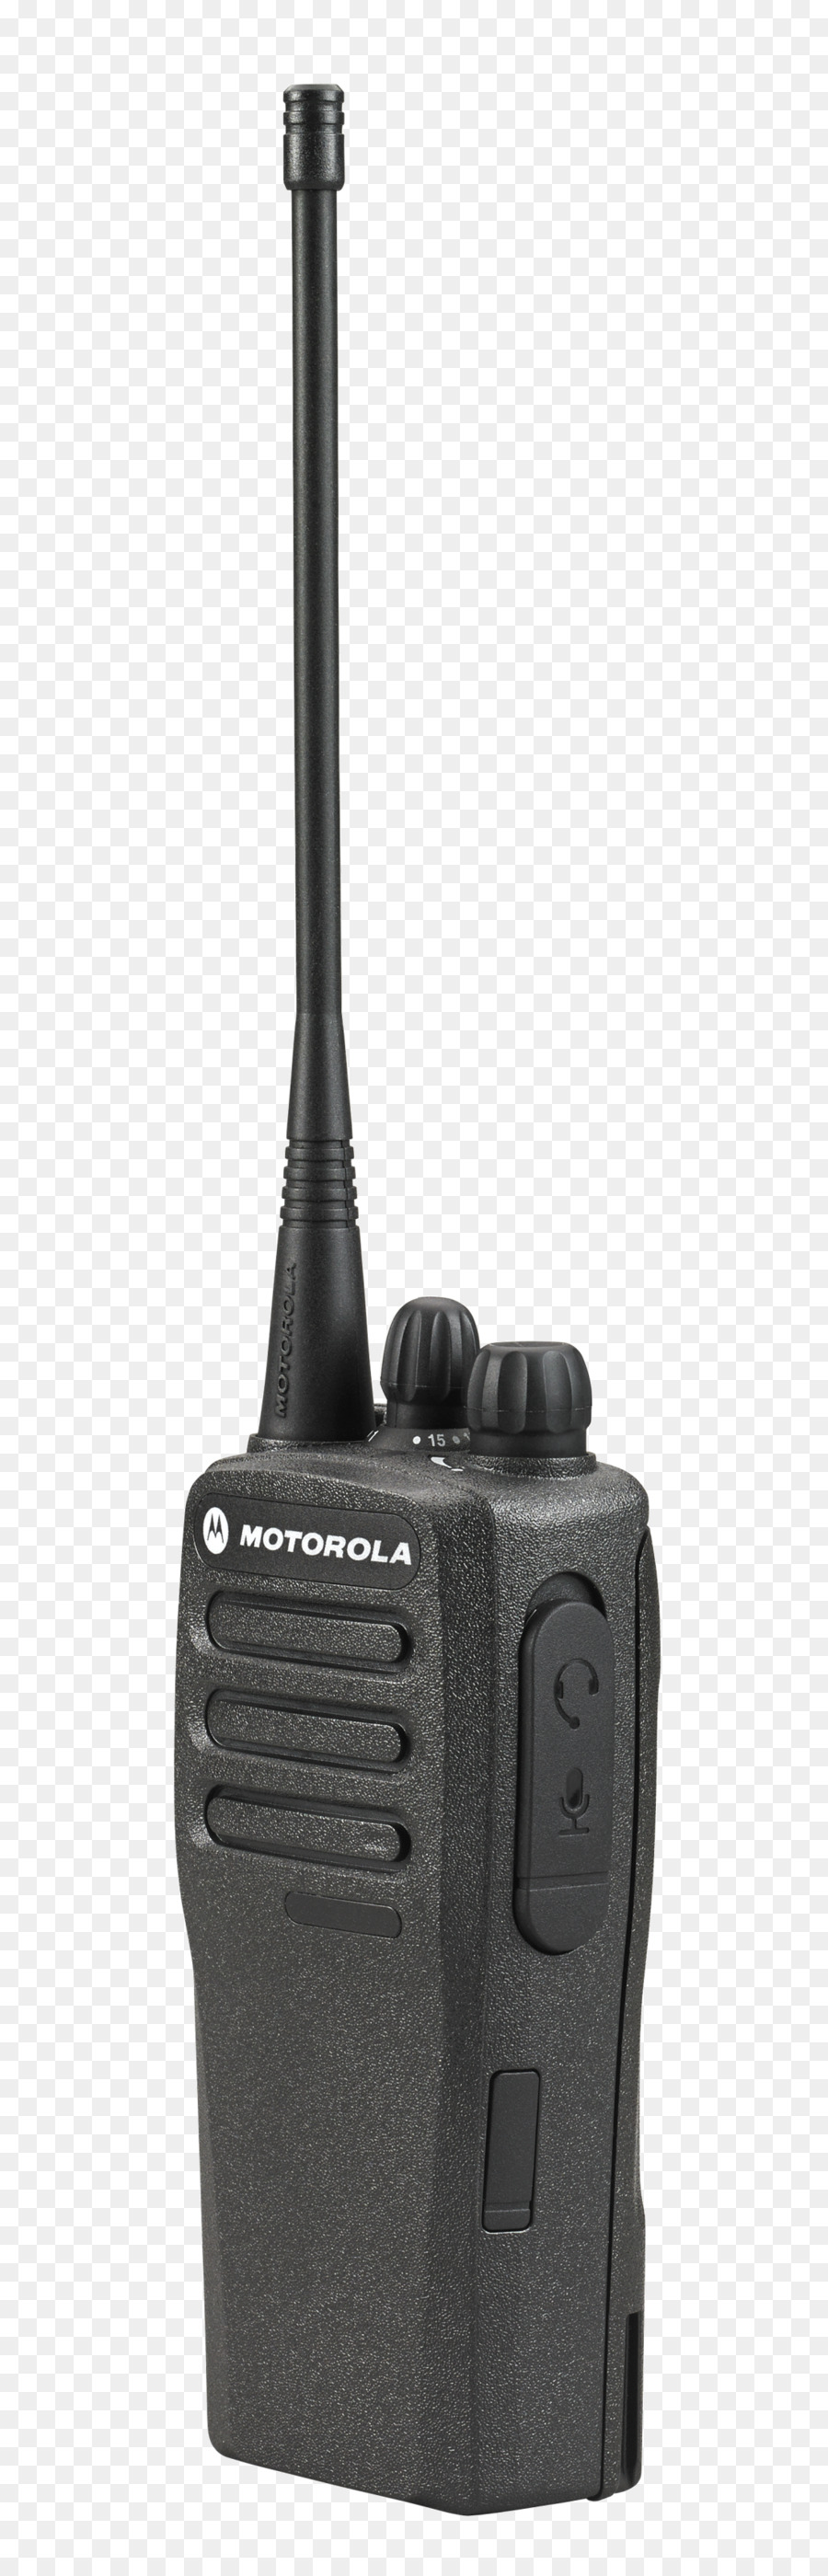 Zwei Wege radio Ultra high frequency Motorola Solutions Sehr hohen Frequenz - Radio